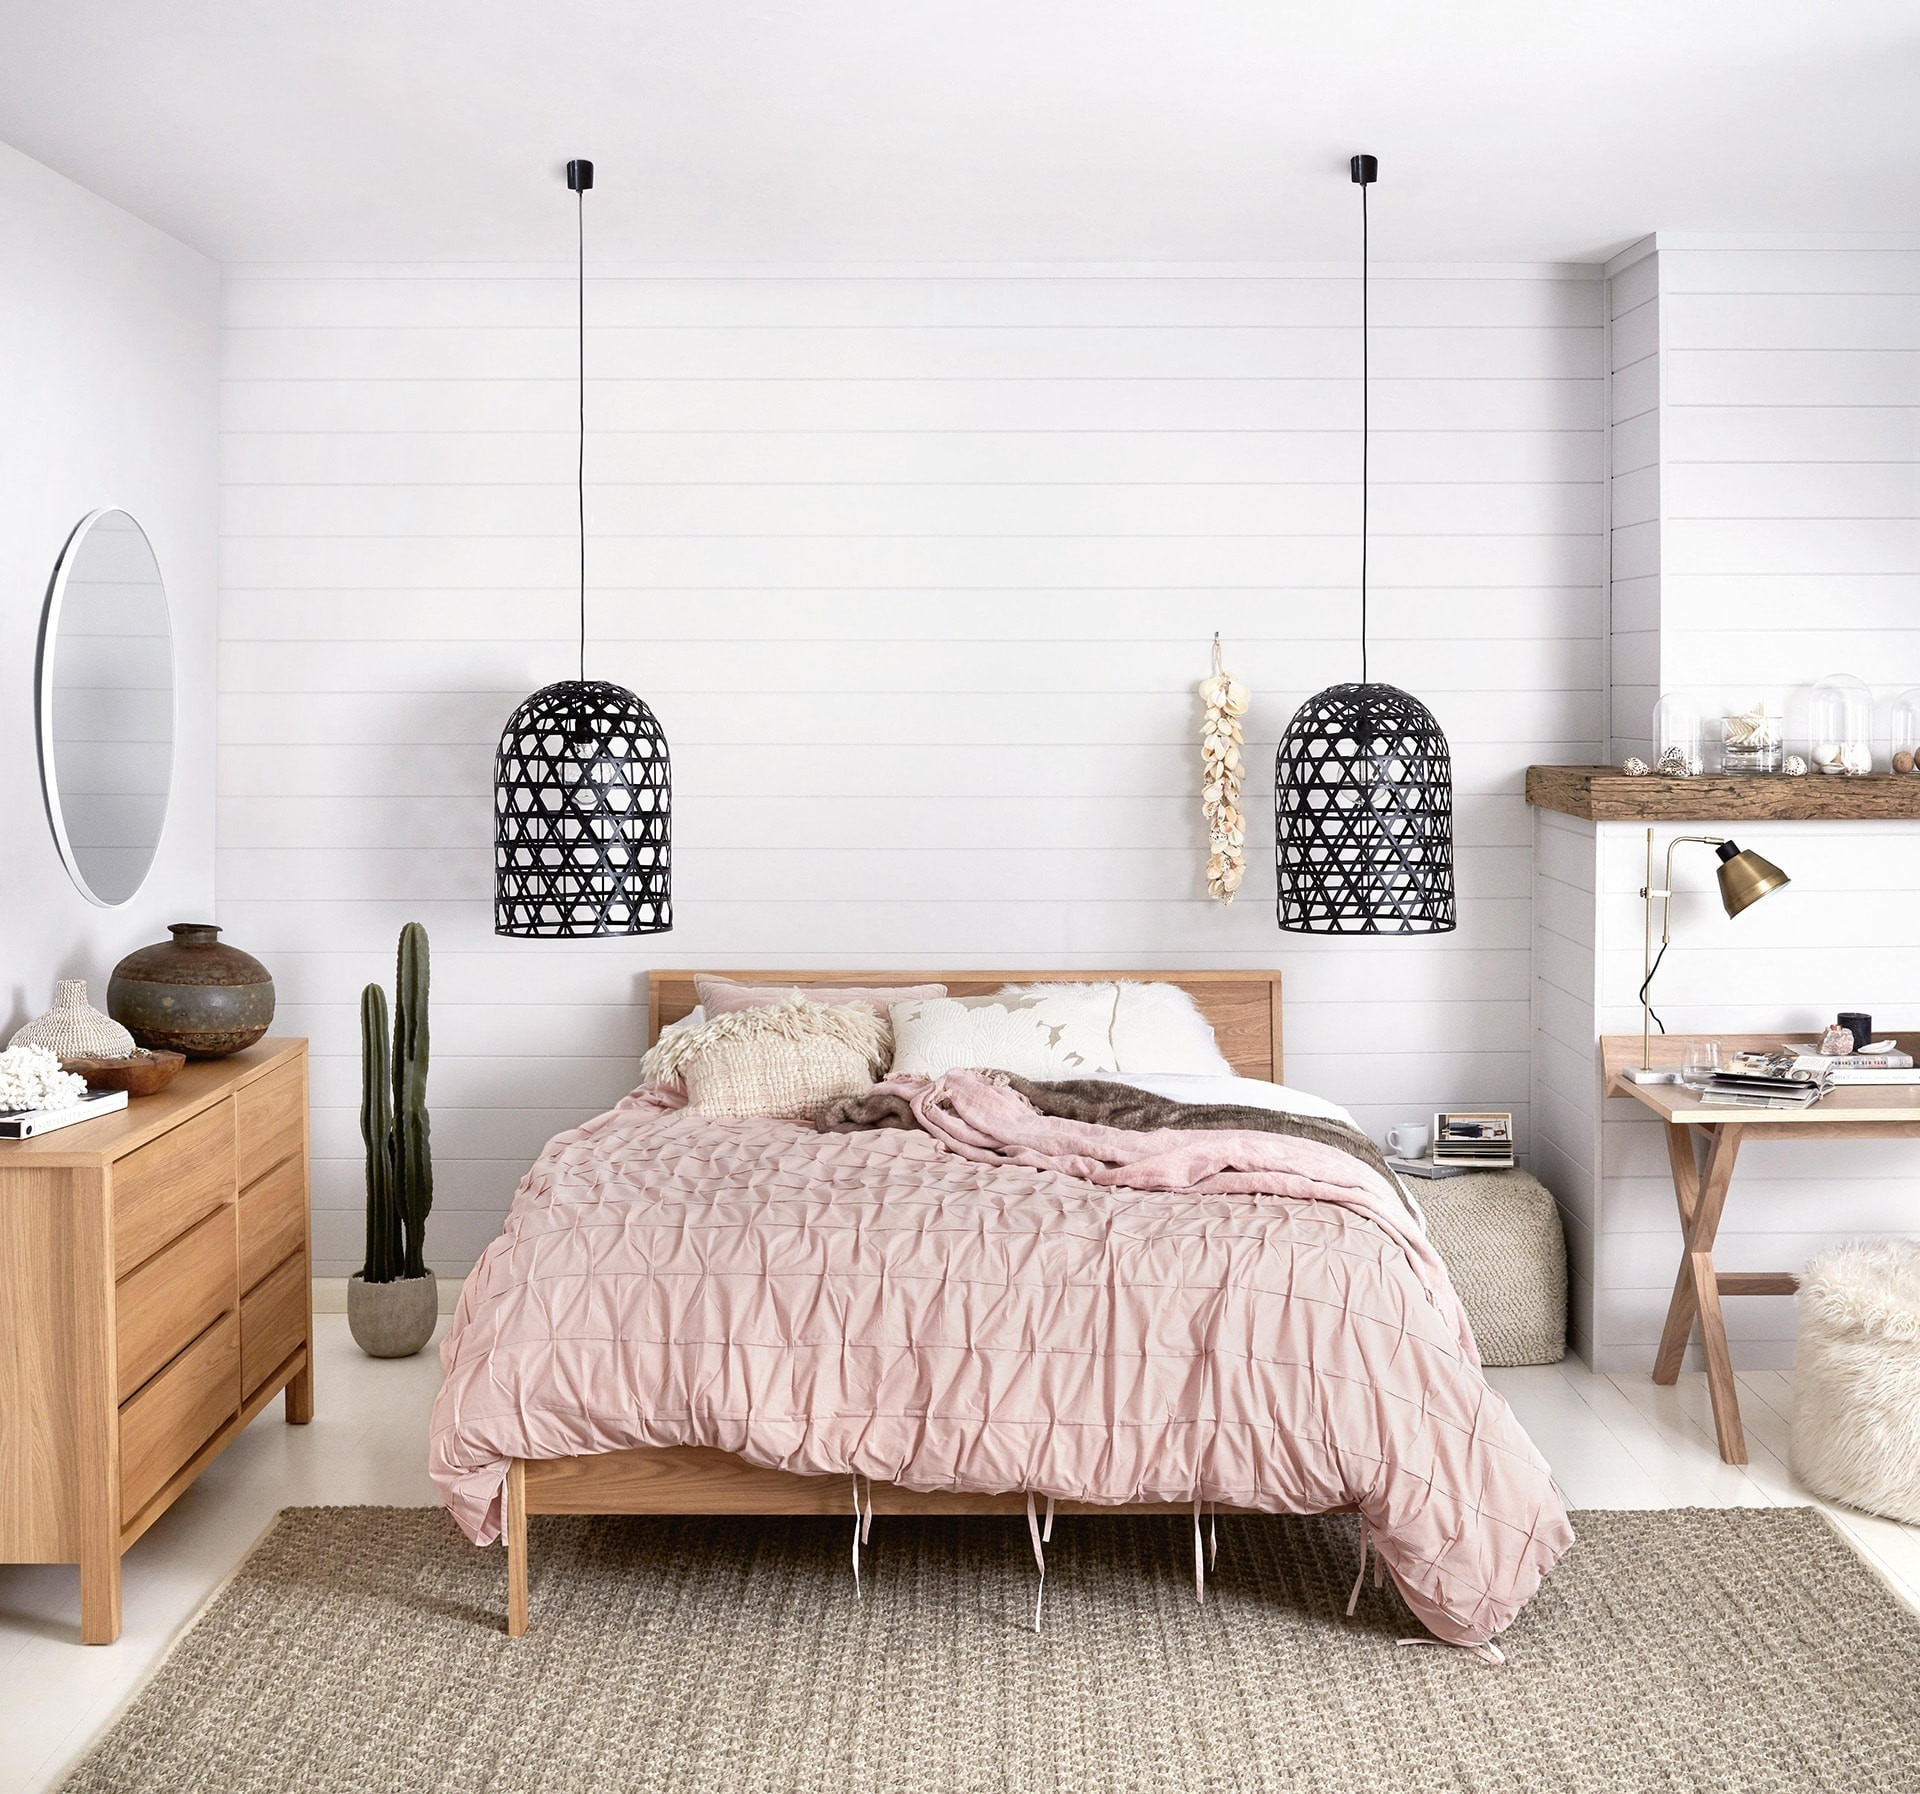 Bedroom Pendant Lighting
 Cheats on Choosing Pendant Lights for a Master Bedroom